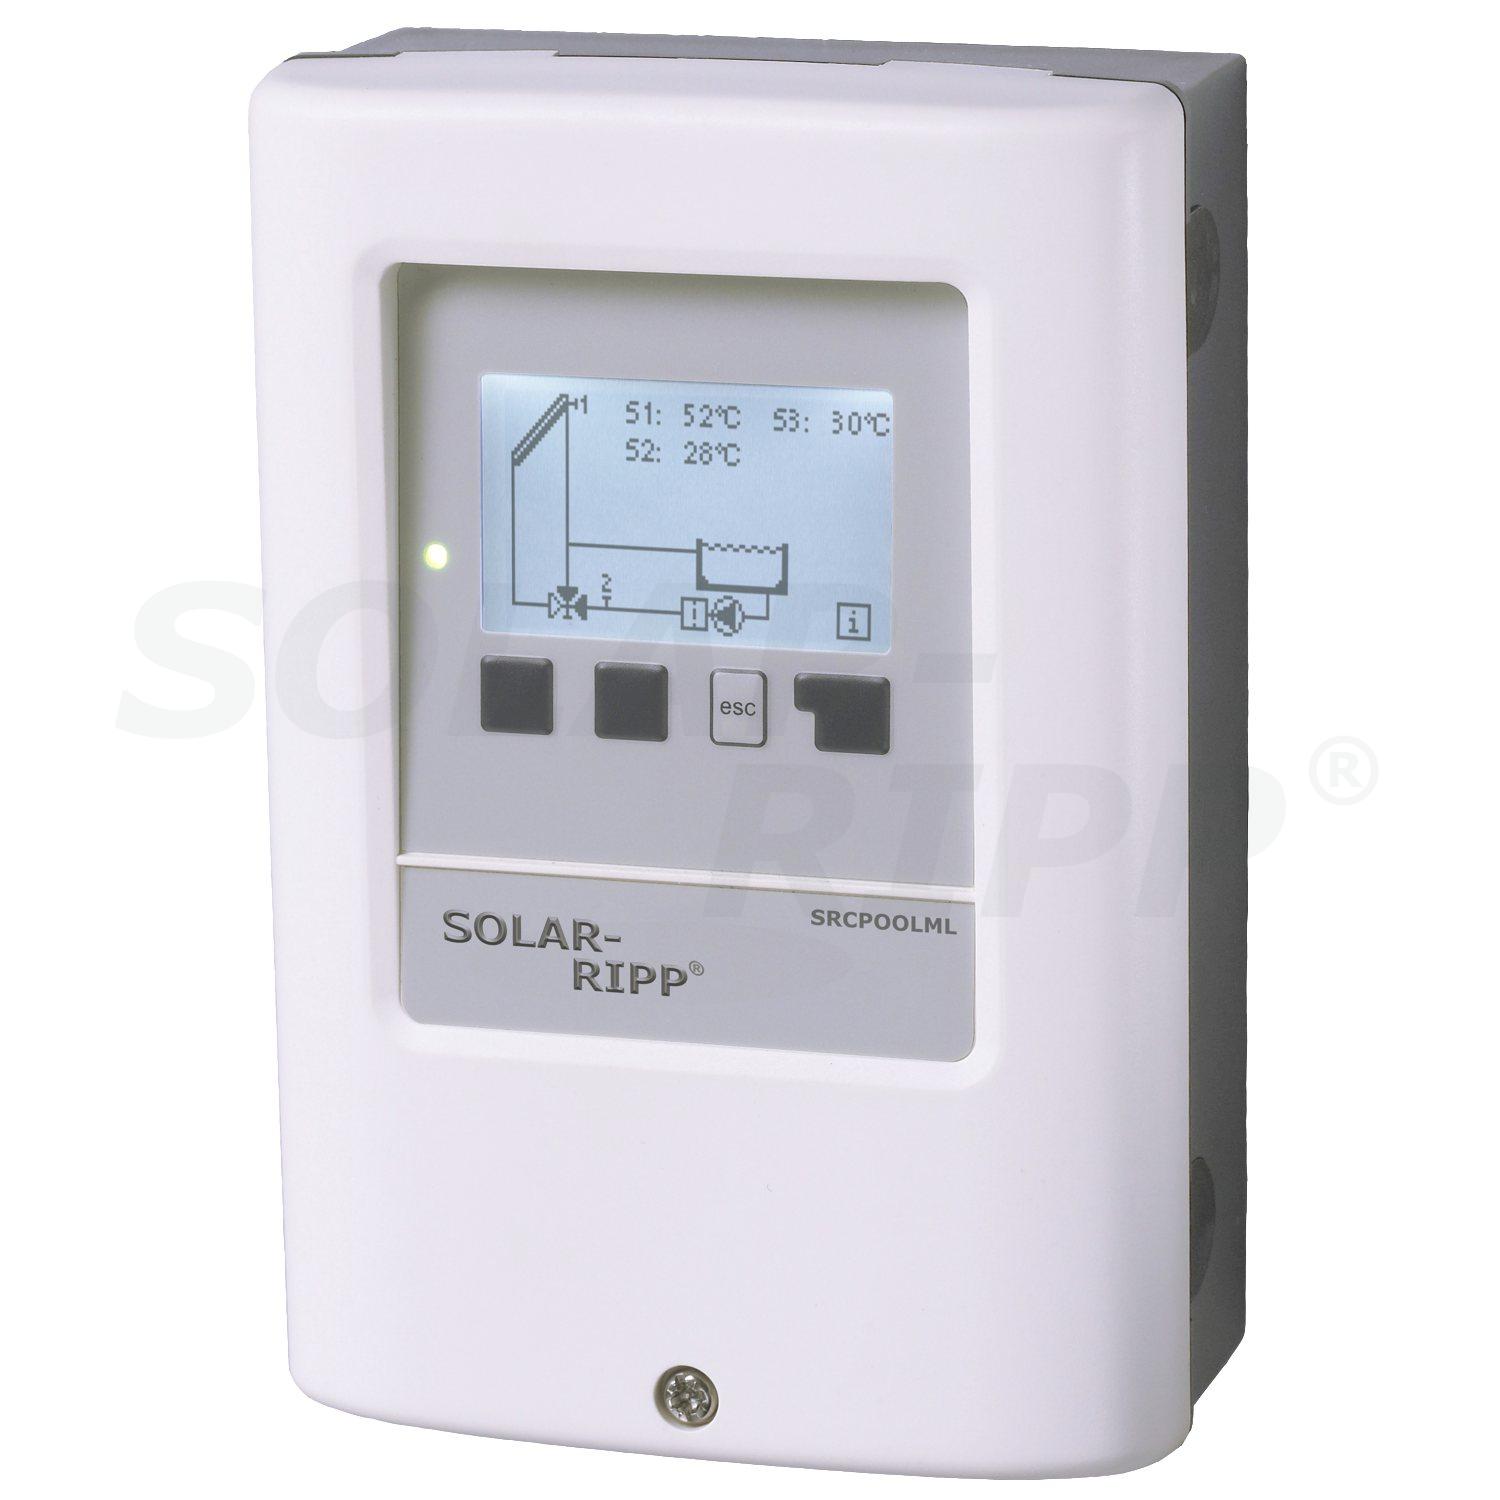 SOLAR-RIPP ® Controlador Solar SRCPOOLML...